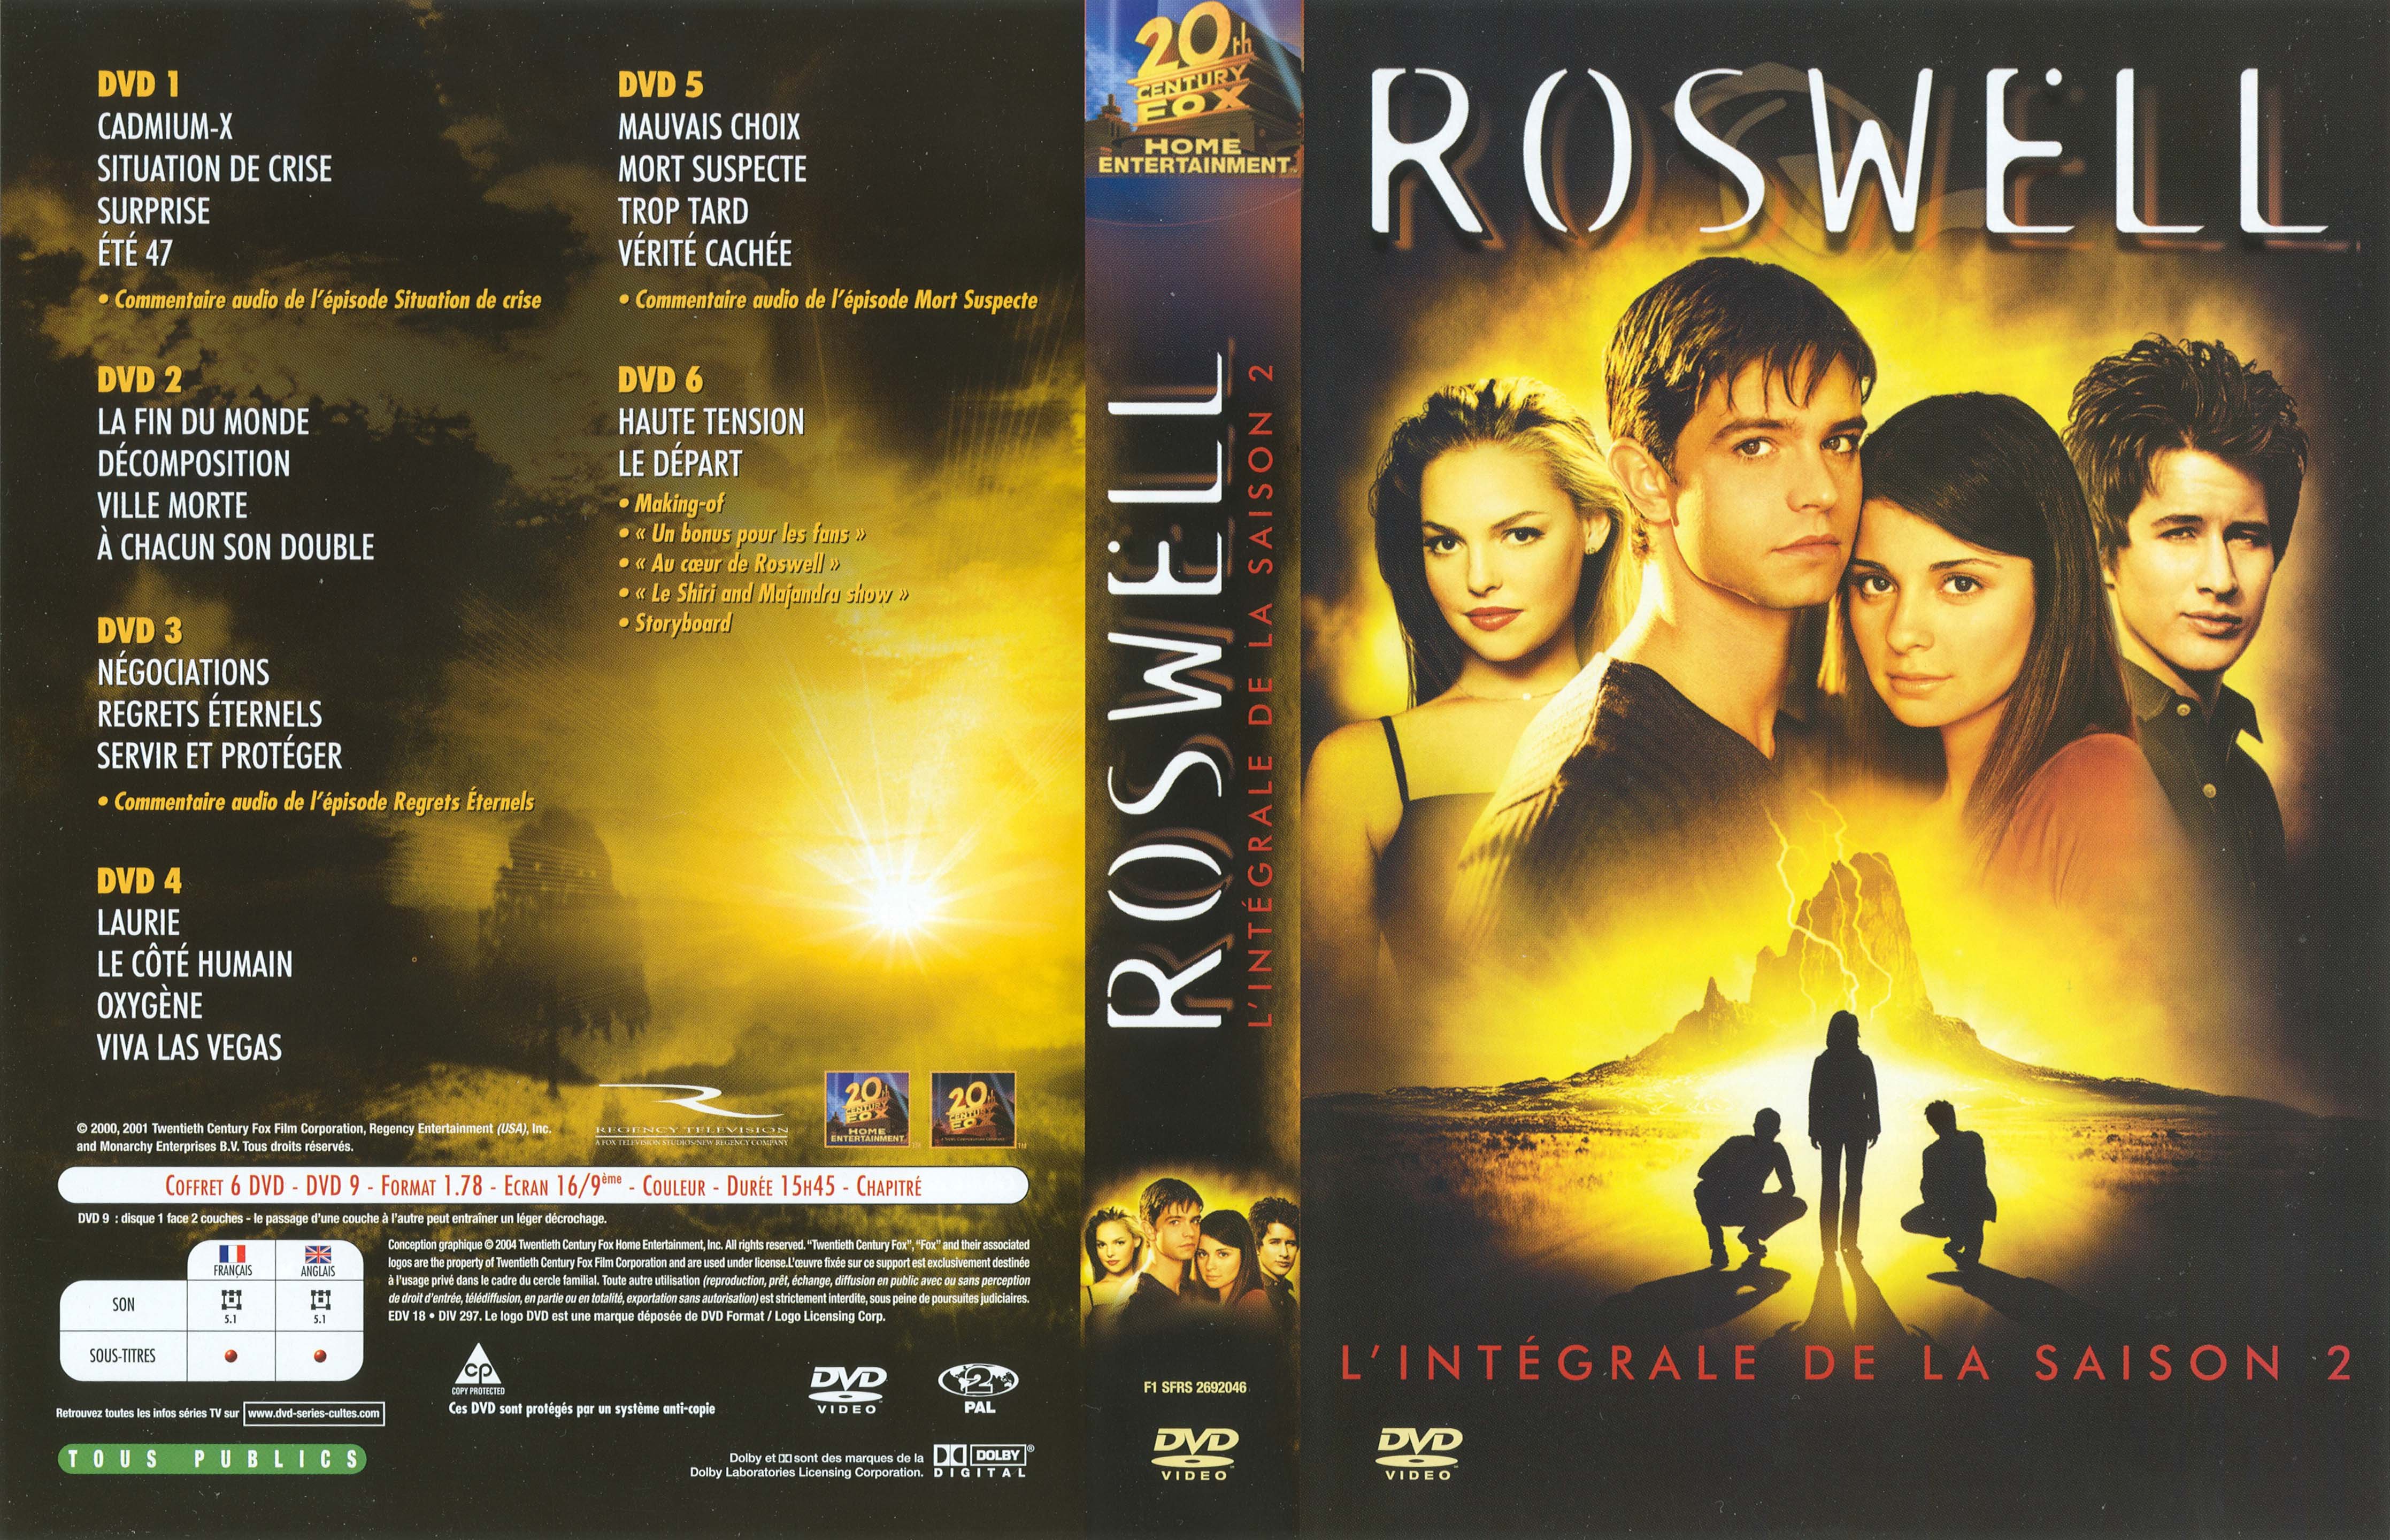 Jaquette DVD Roswell saison 2 COFFRET